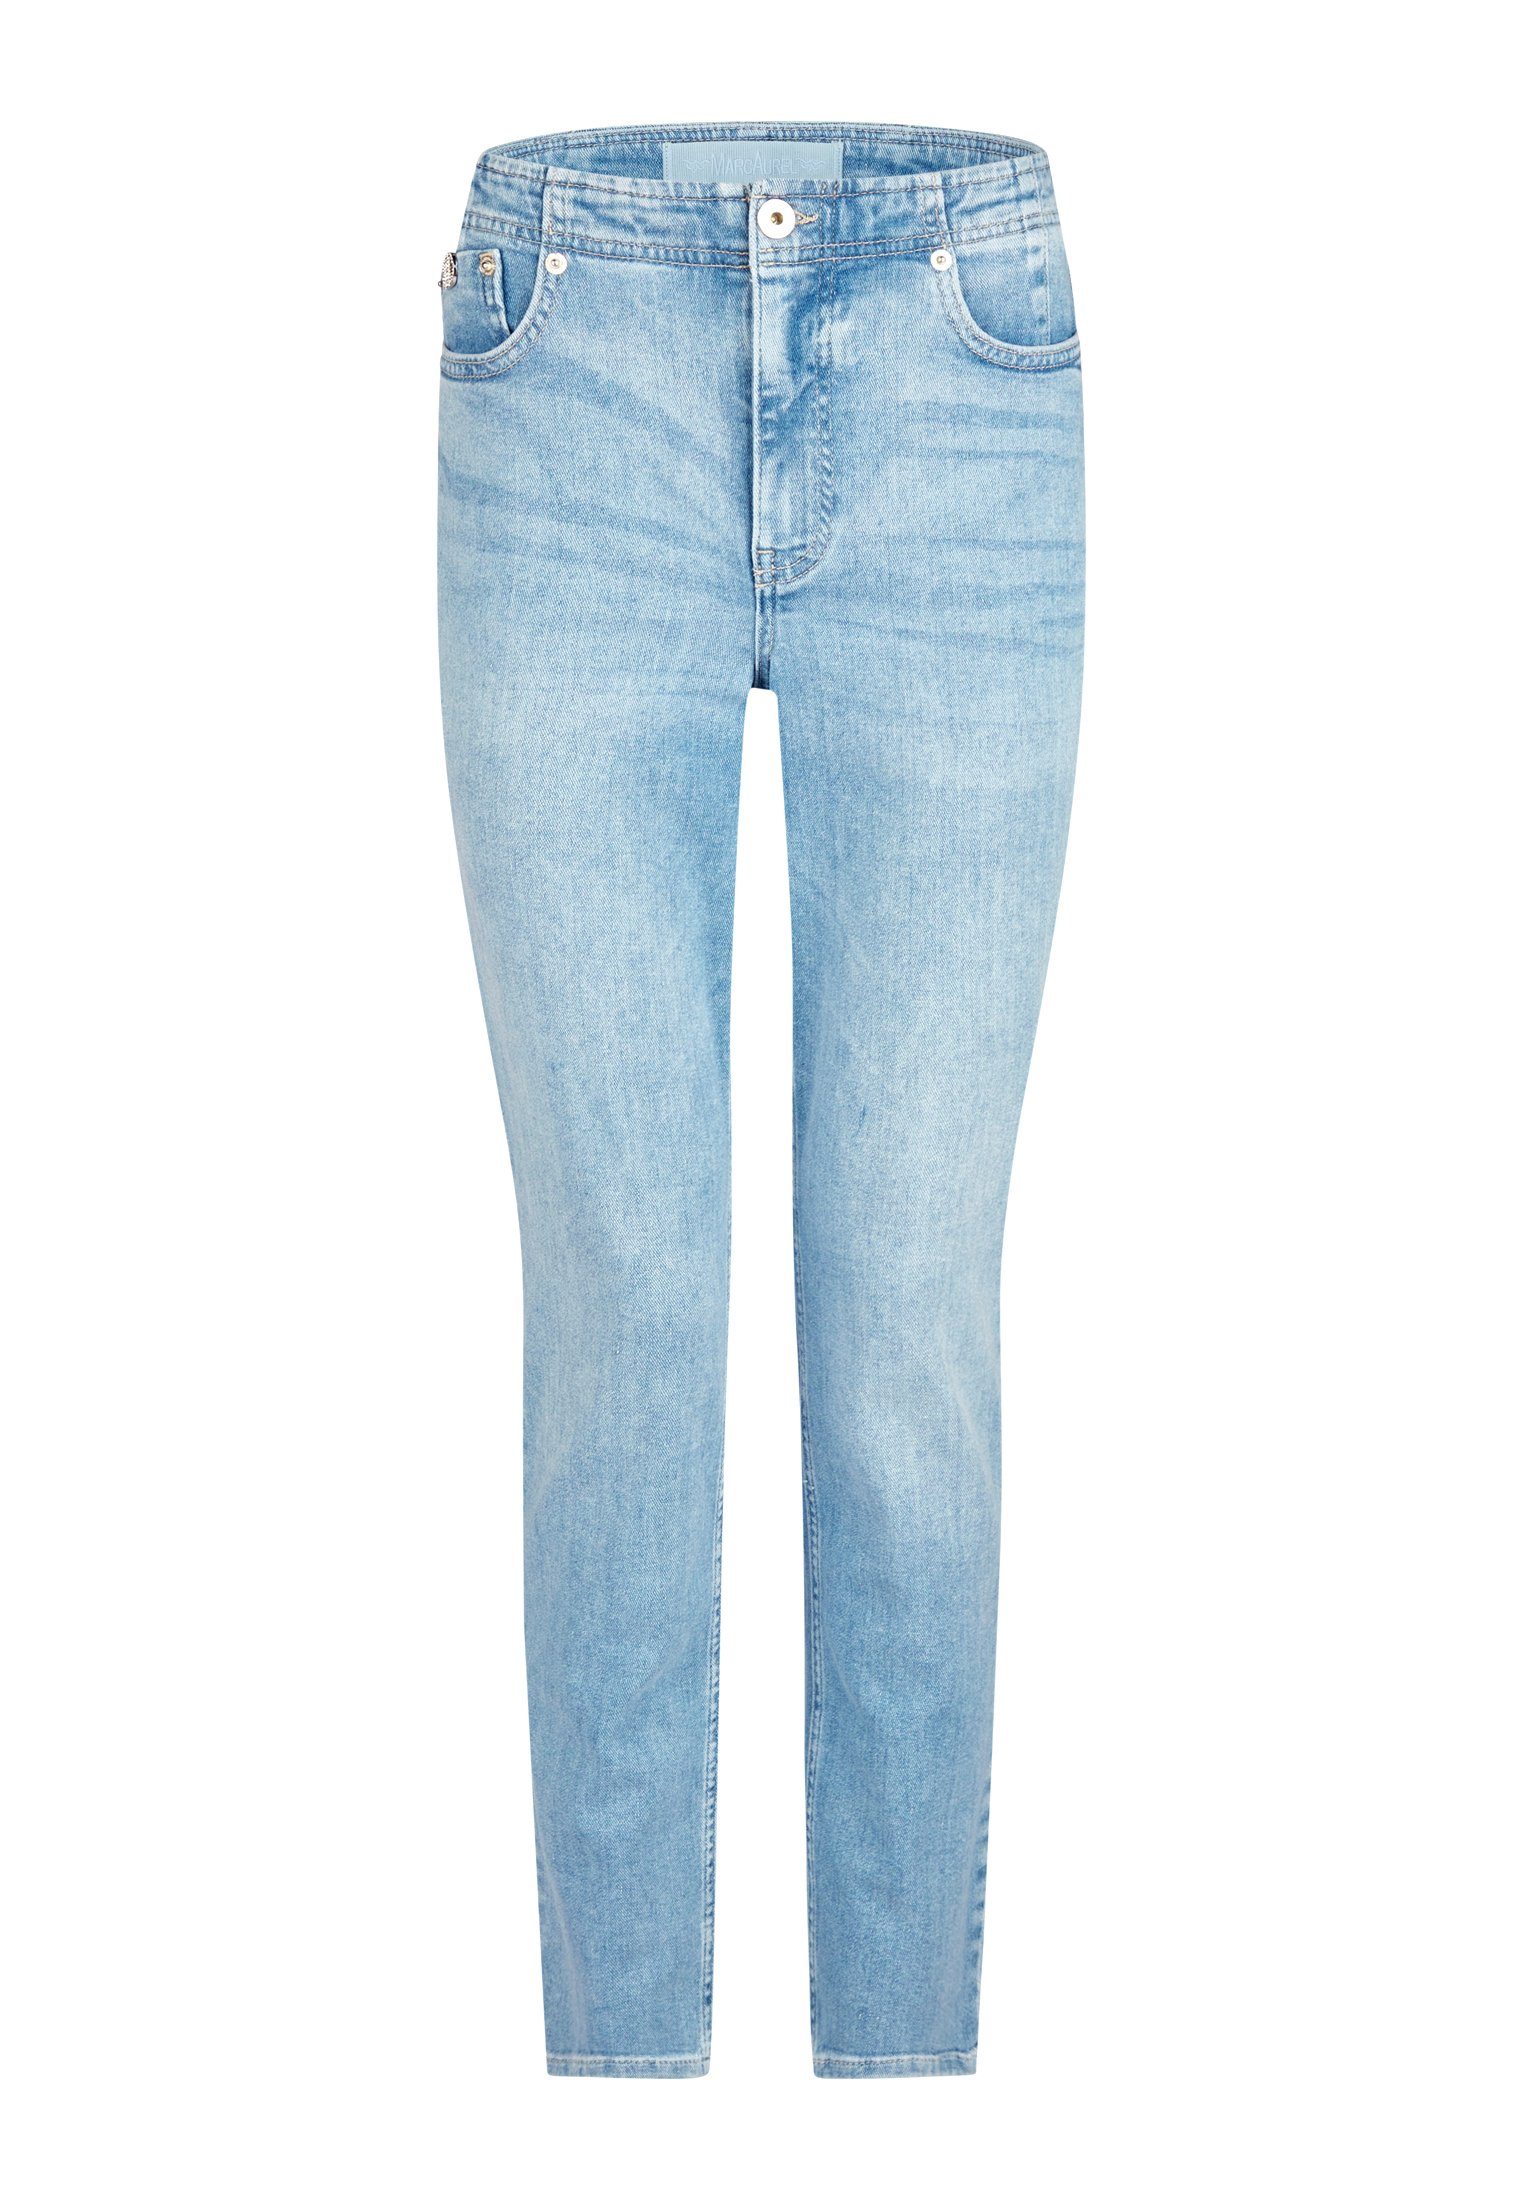 AUREL Skinny-fit-Jeans in MARC Blue Denim